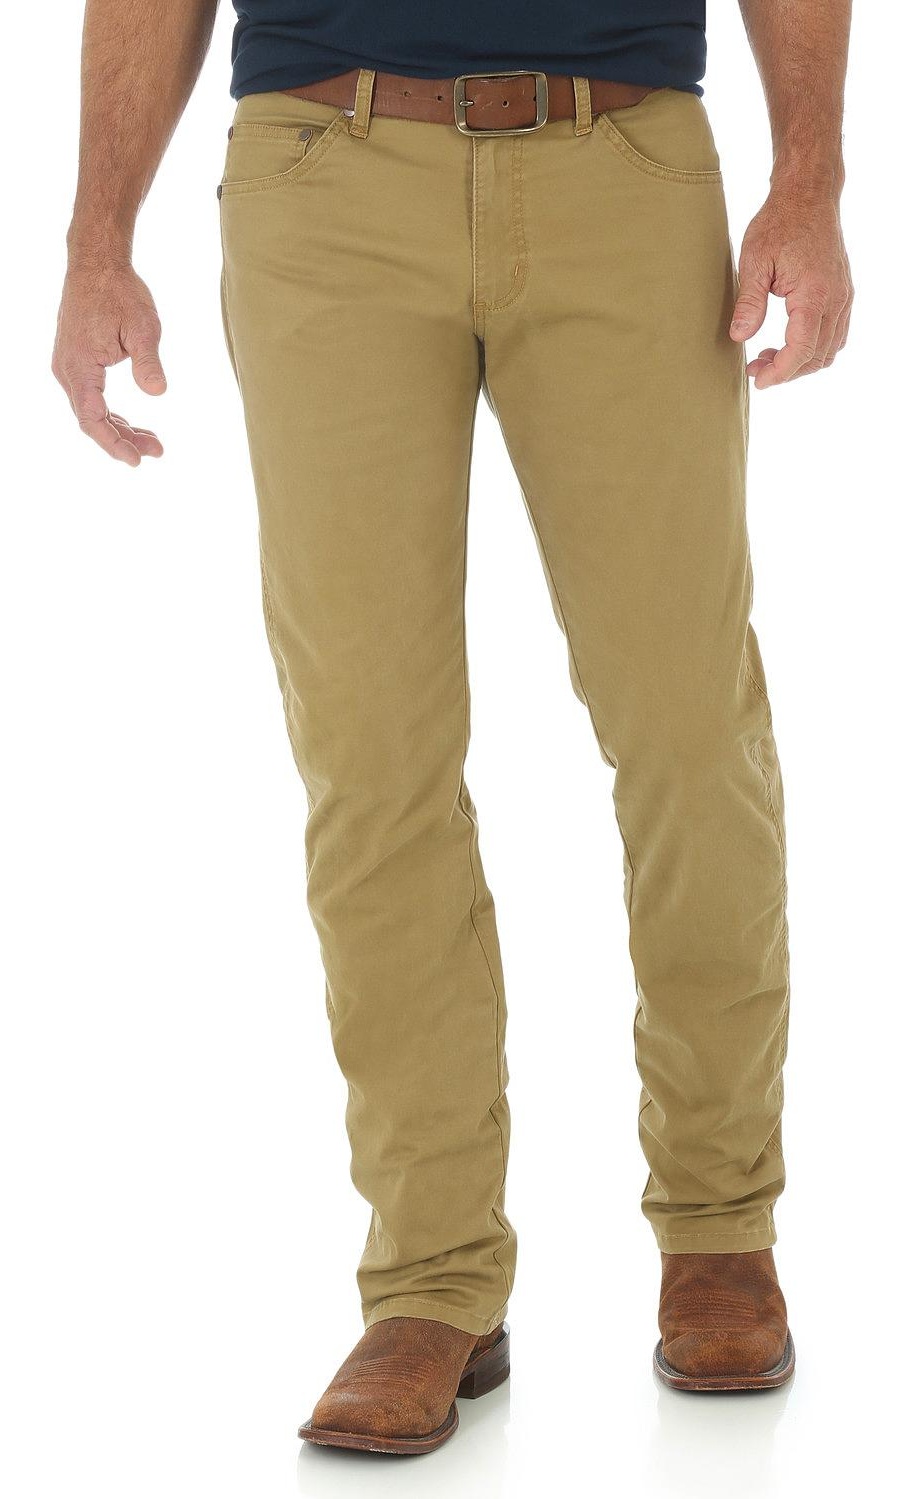 Wrangler Men's Retro Slim Fit Straight Leg Khaki Jeans - 88Mwzan - image 3 of 3